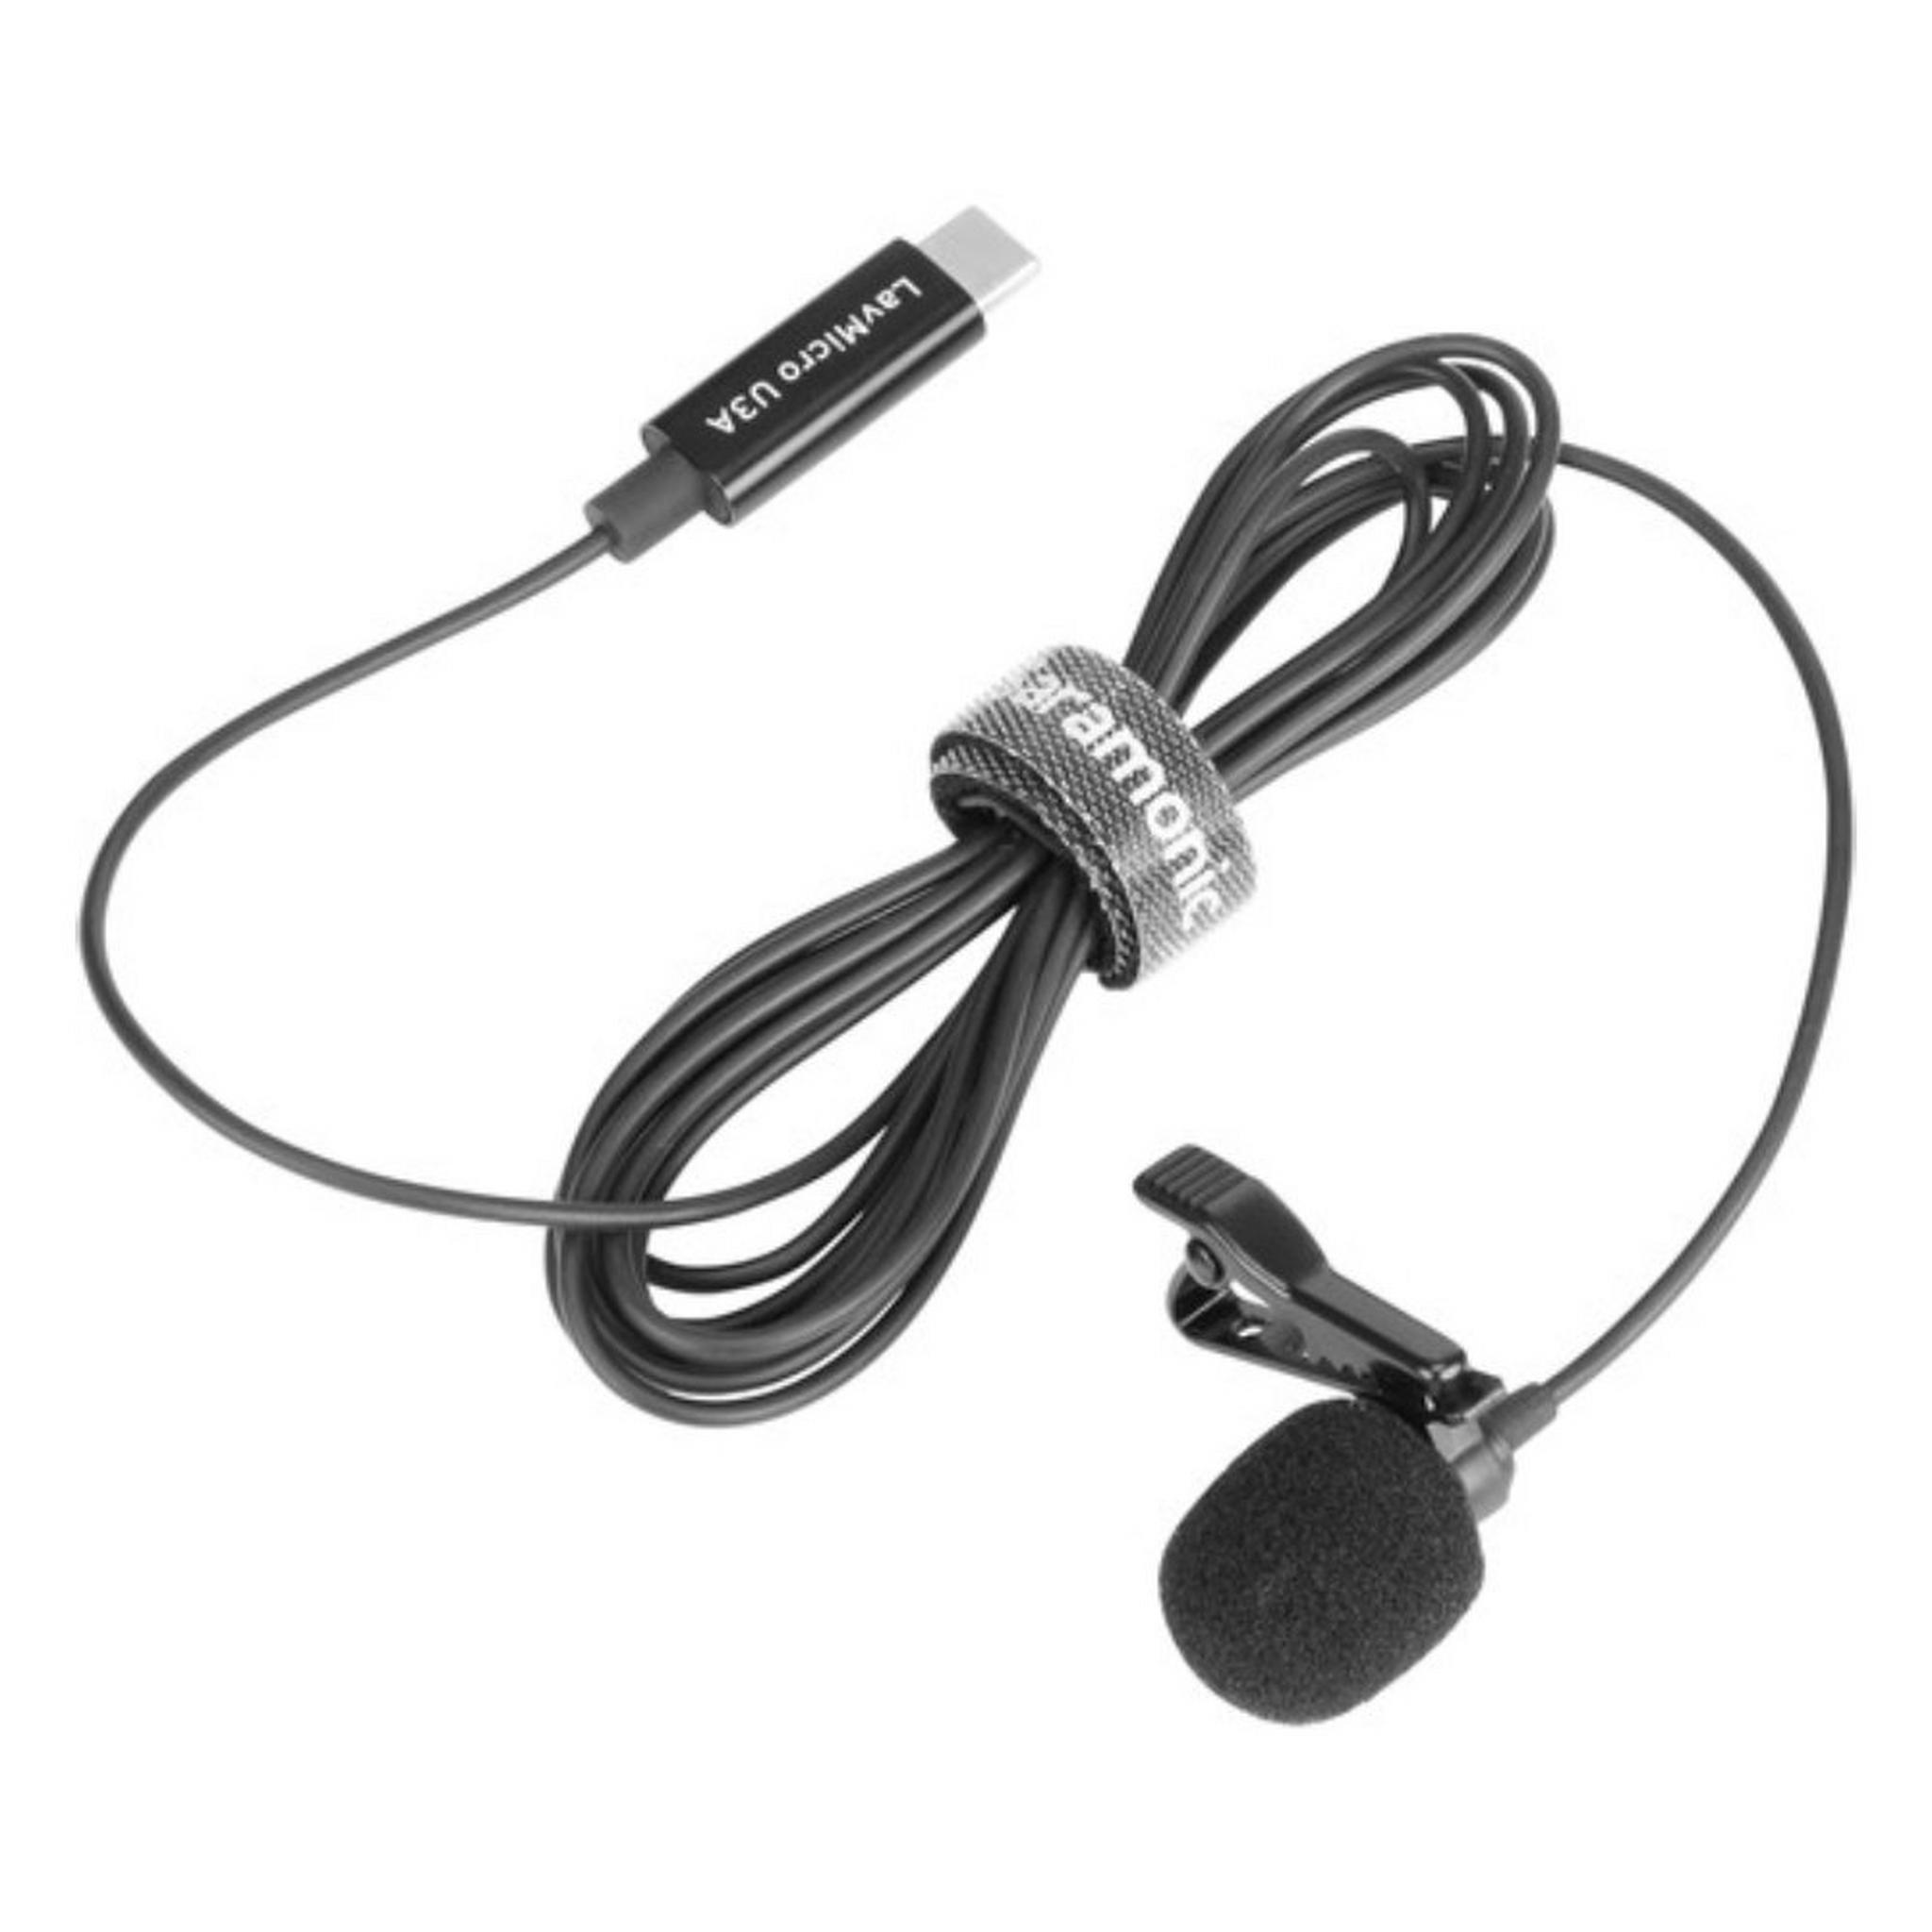 Saramonic LavMicro U3A Digital USB-C Microphone